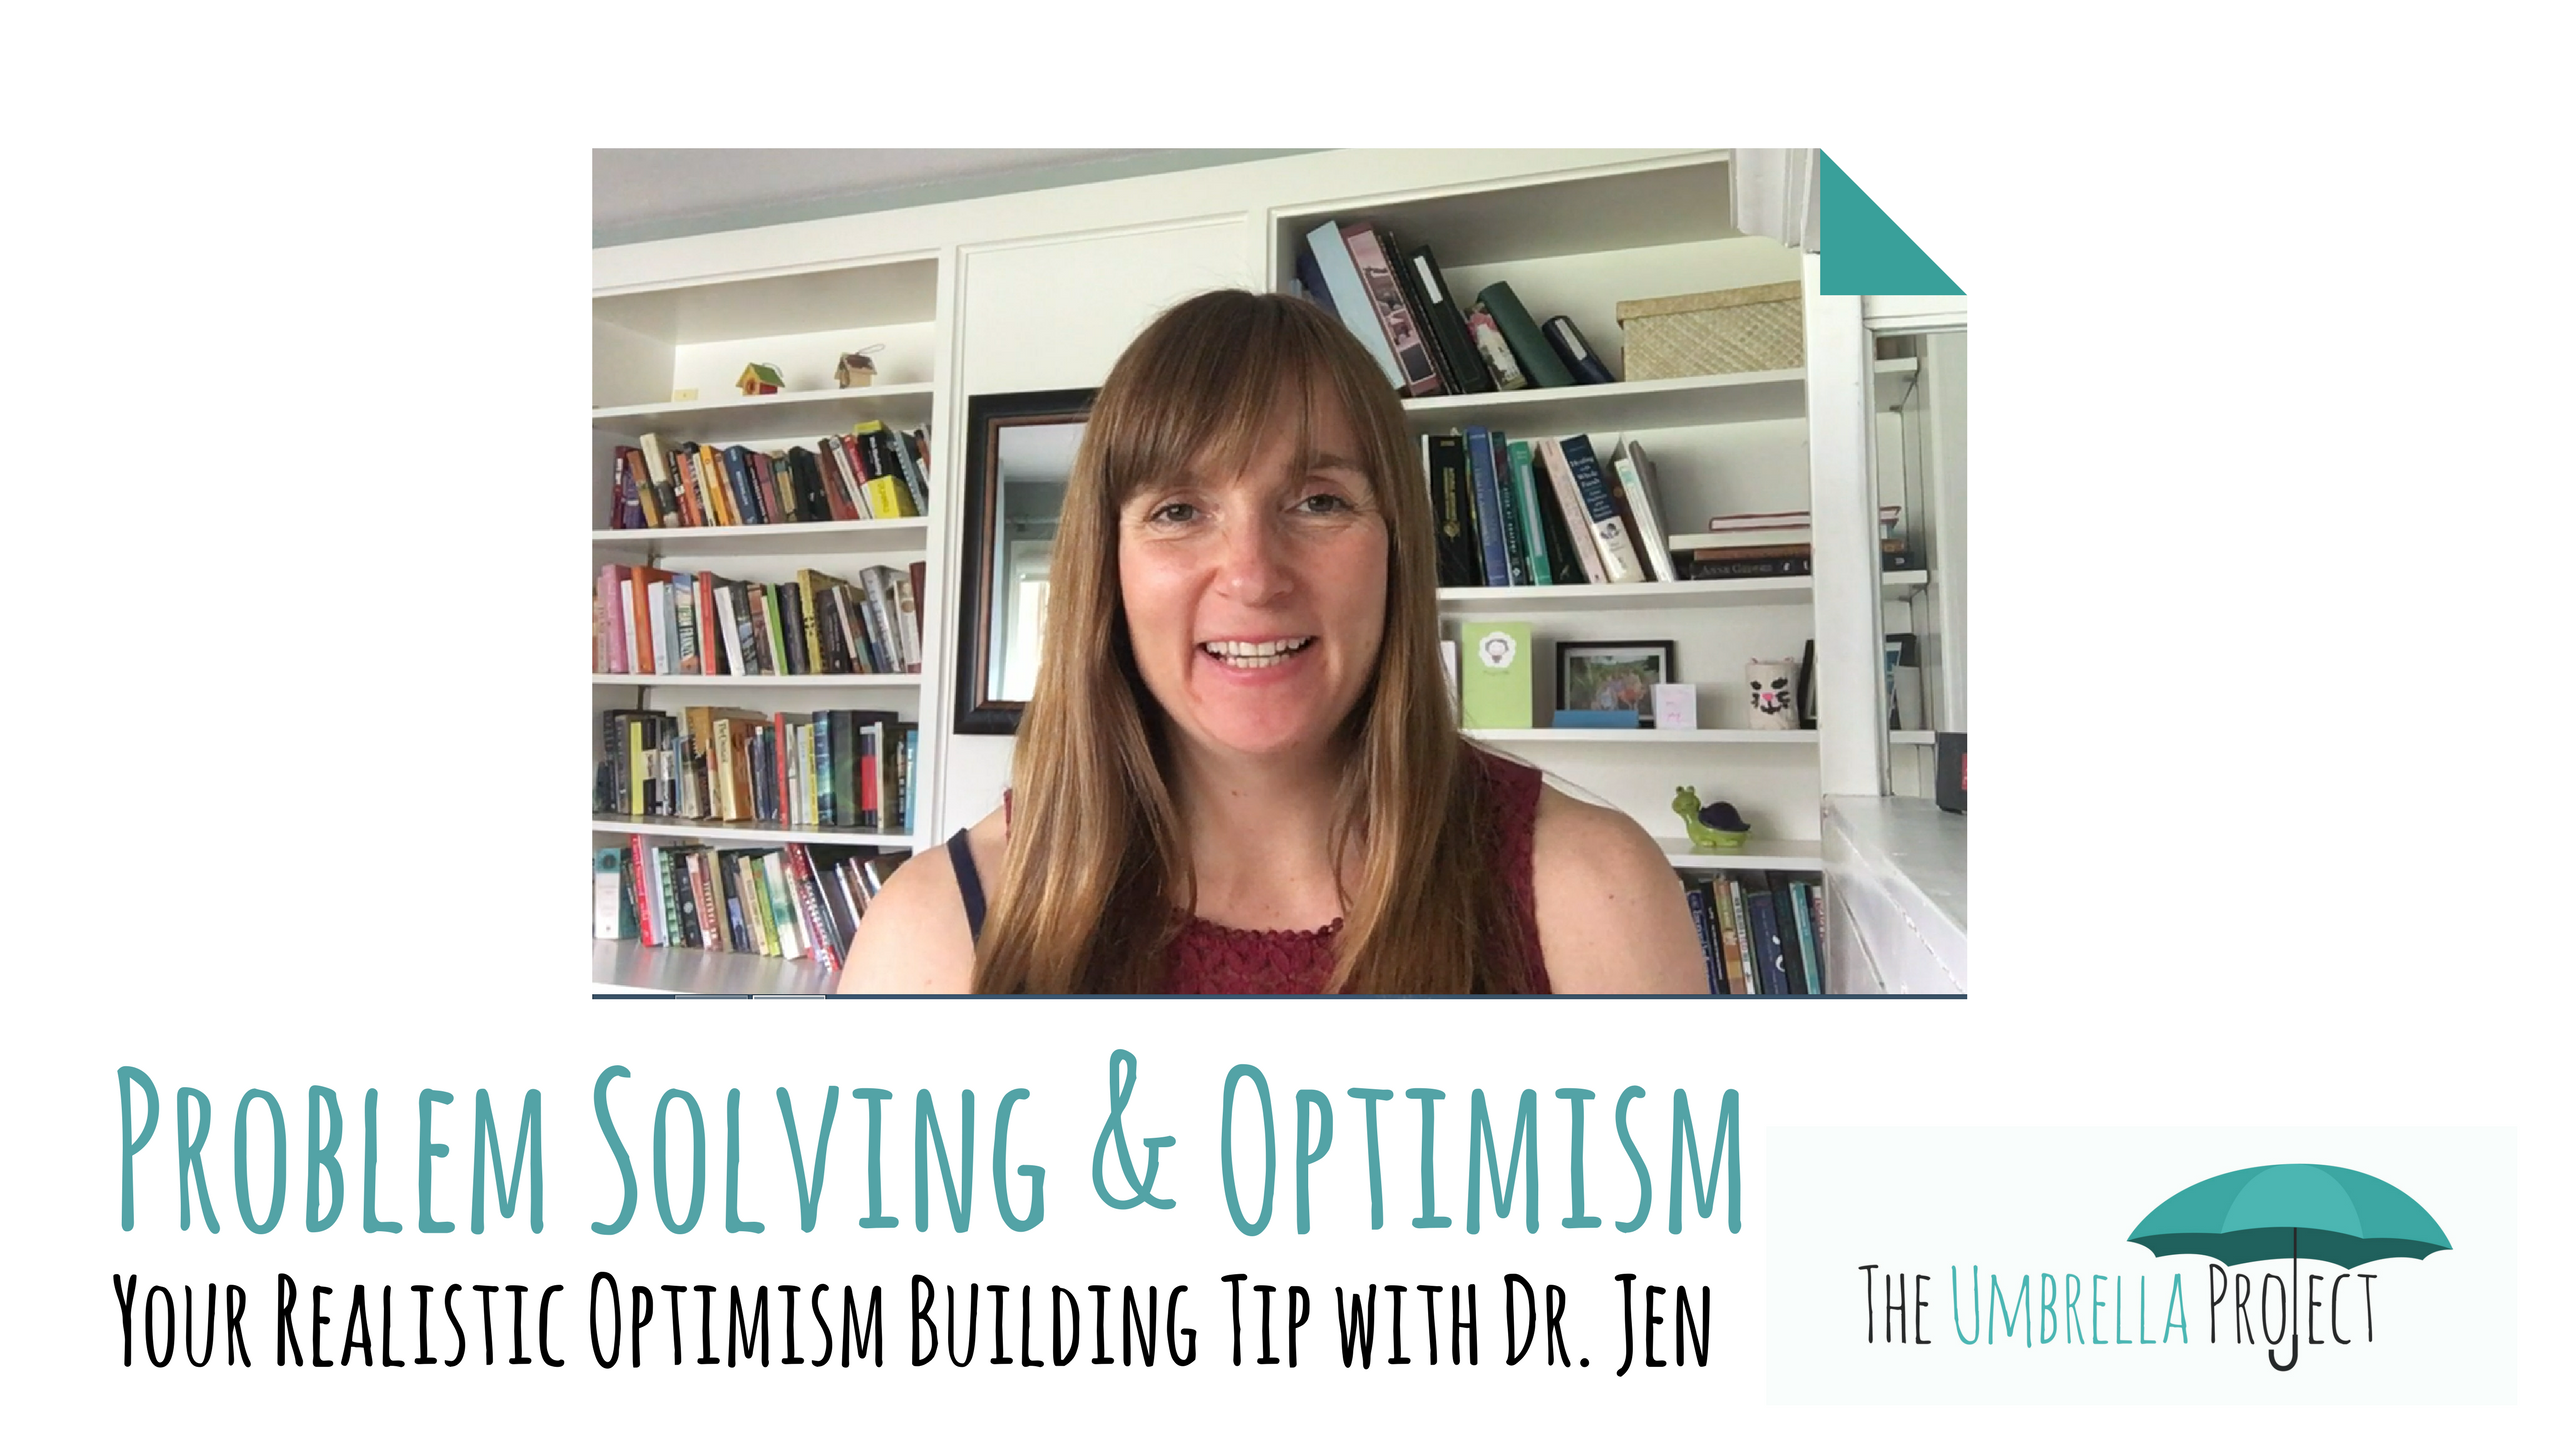 Problem Solving & Optimism: Your Realistic Optimism Building Tip with Dr. Jen